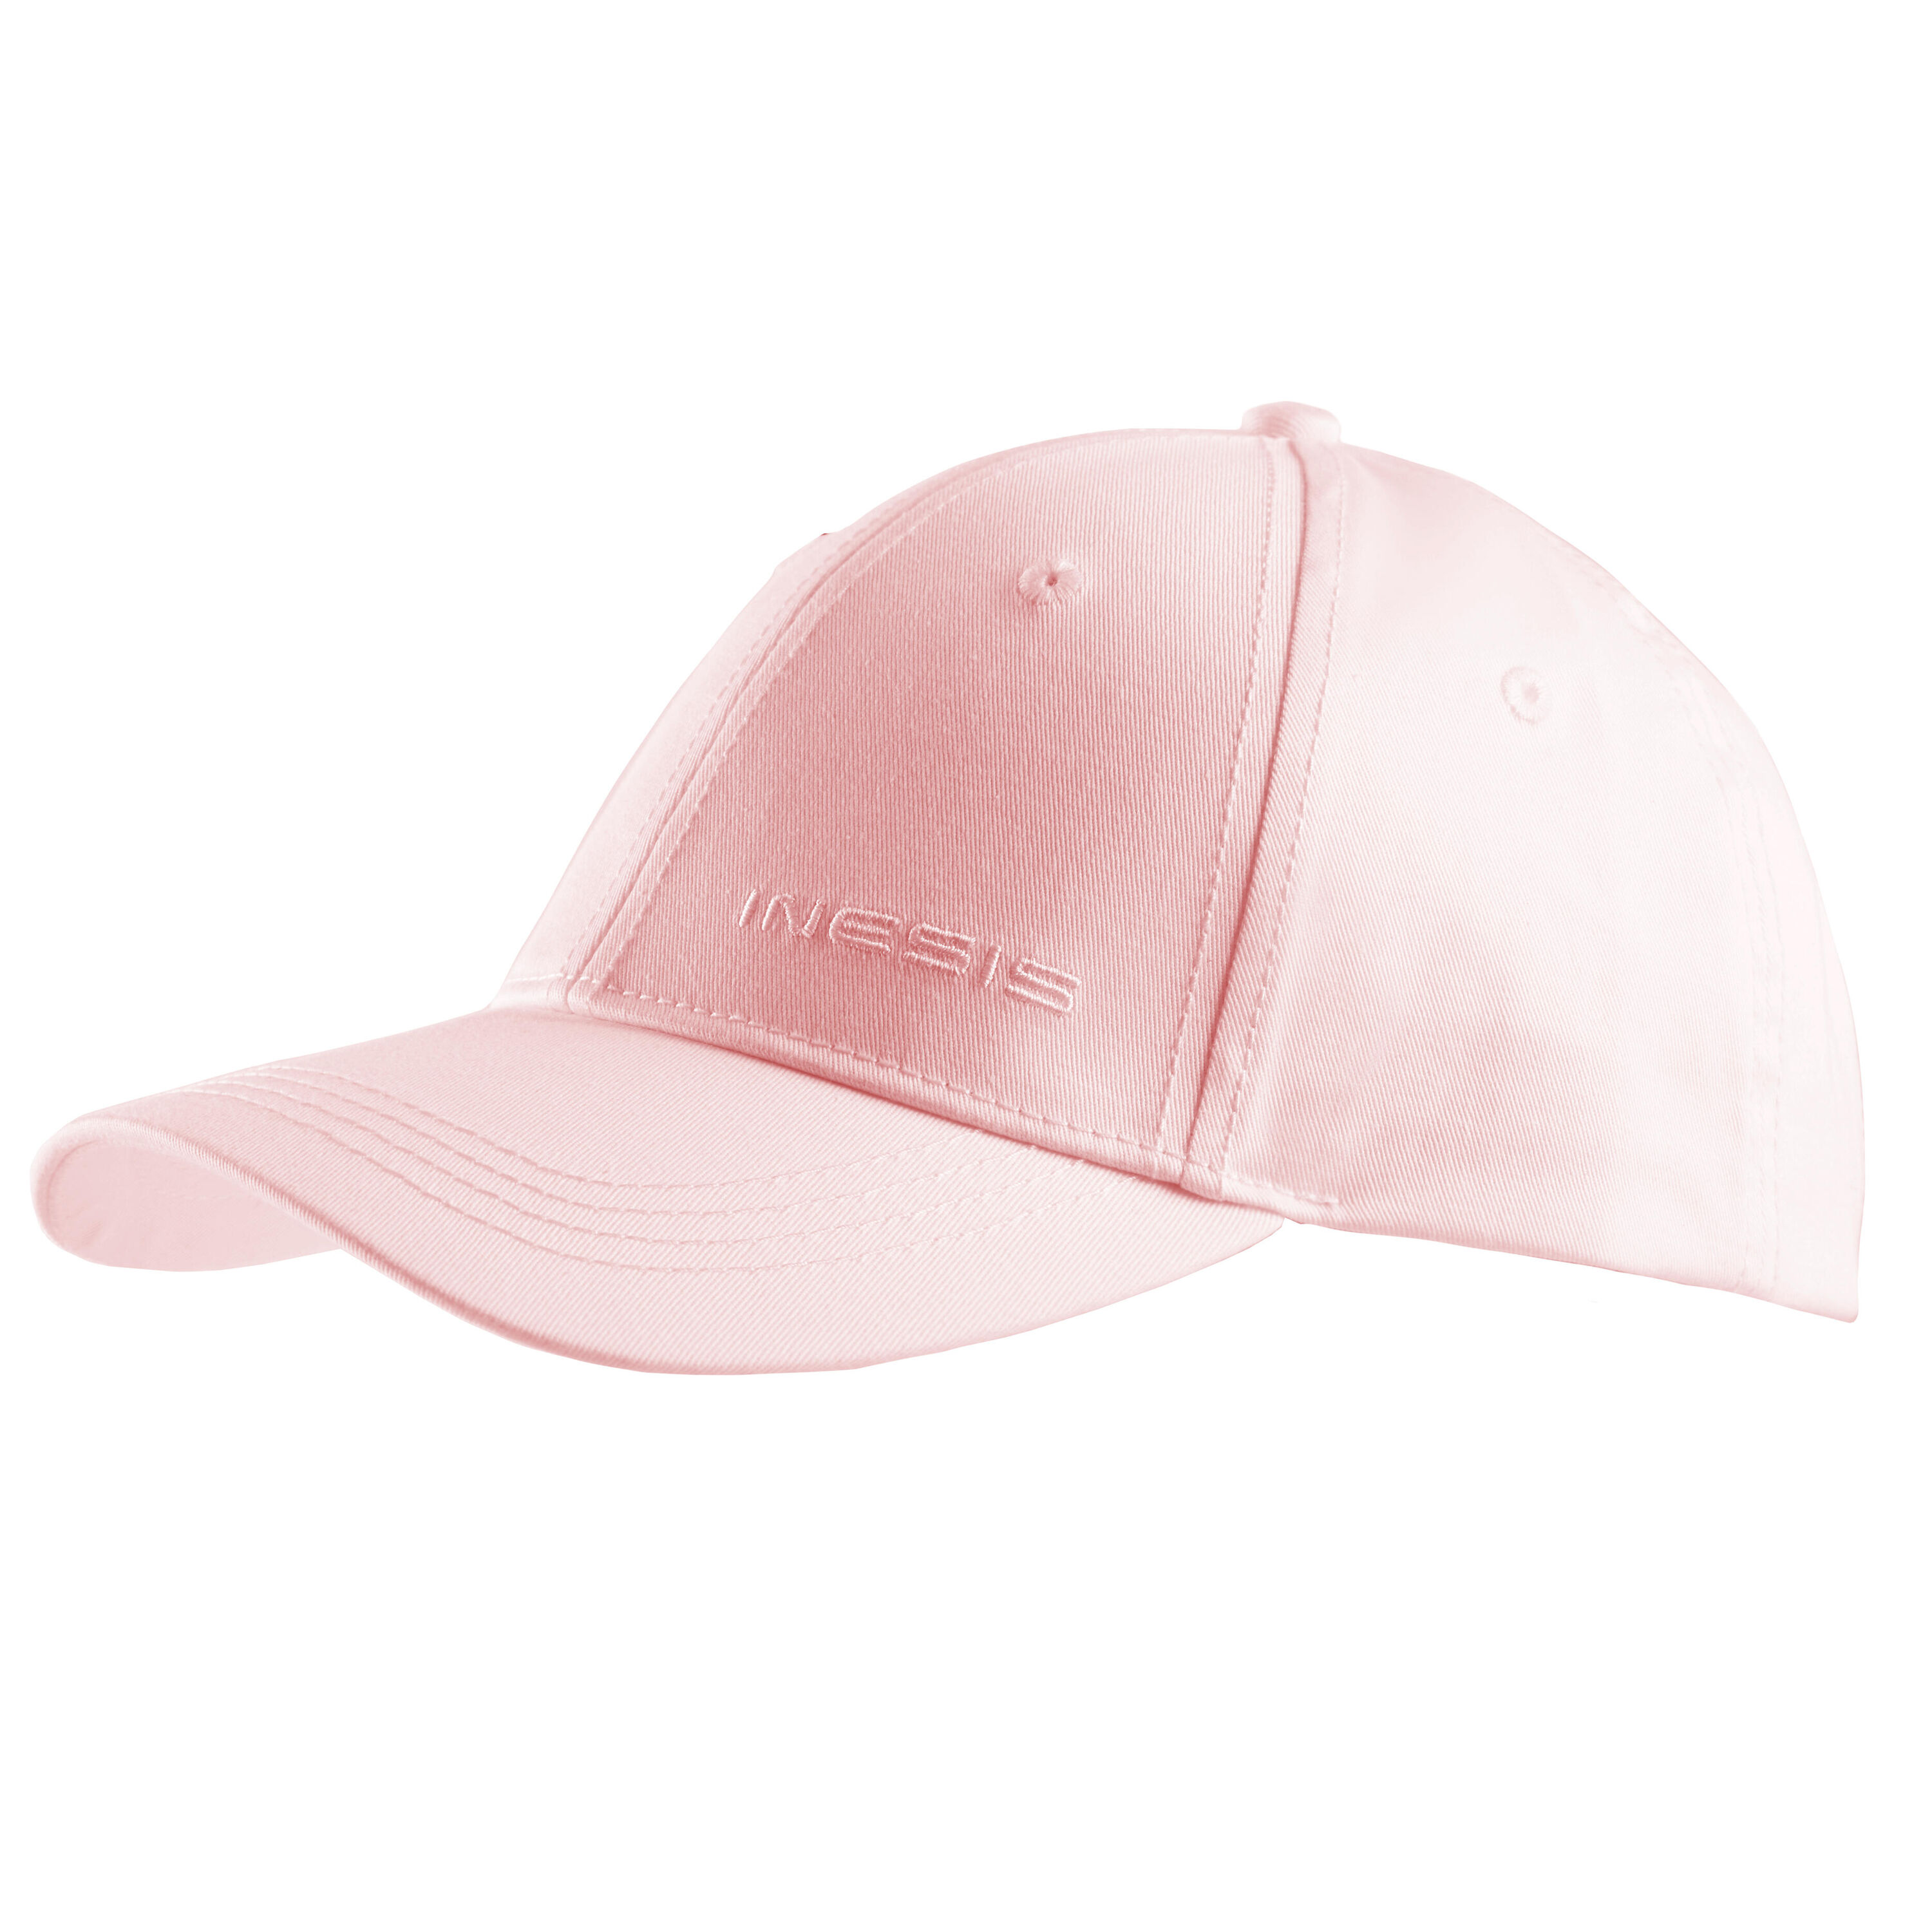 INESIS Adult's golf cap - MW 500 light pink